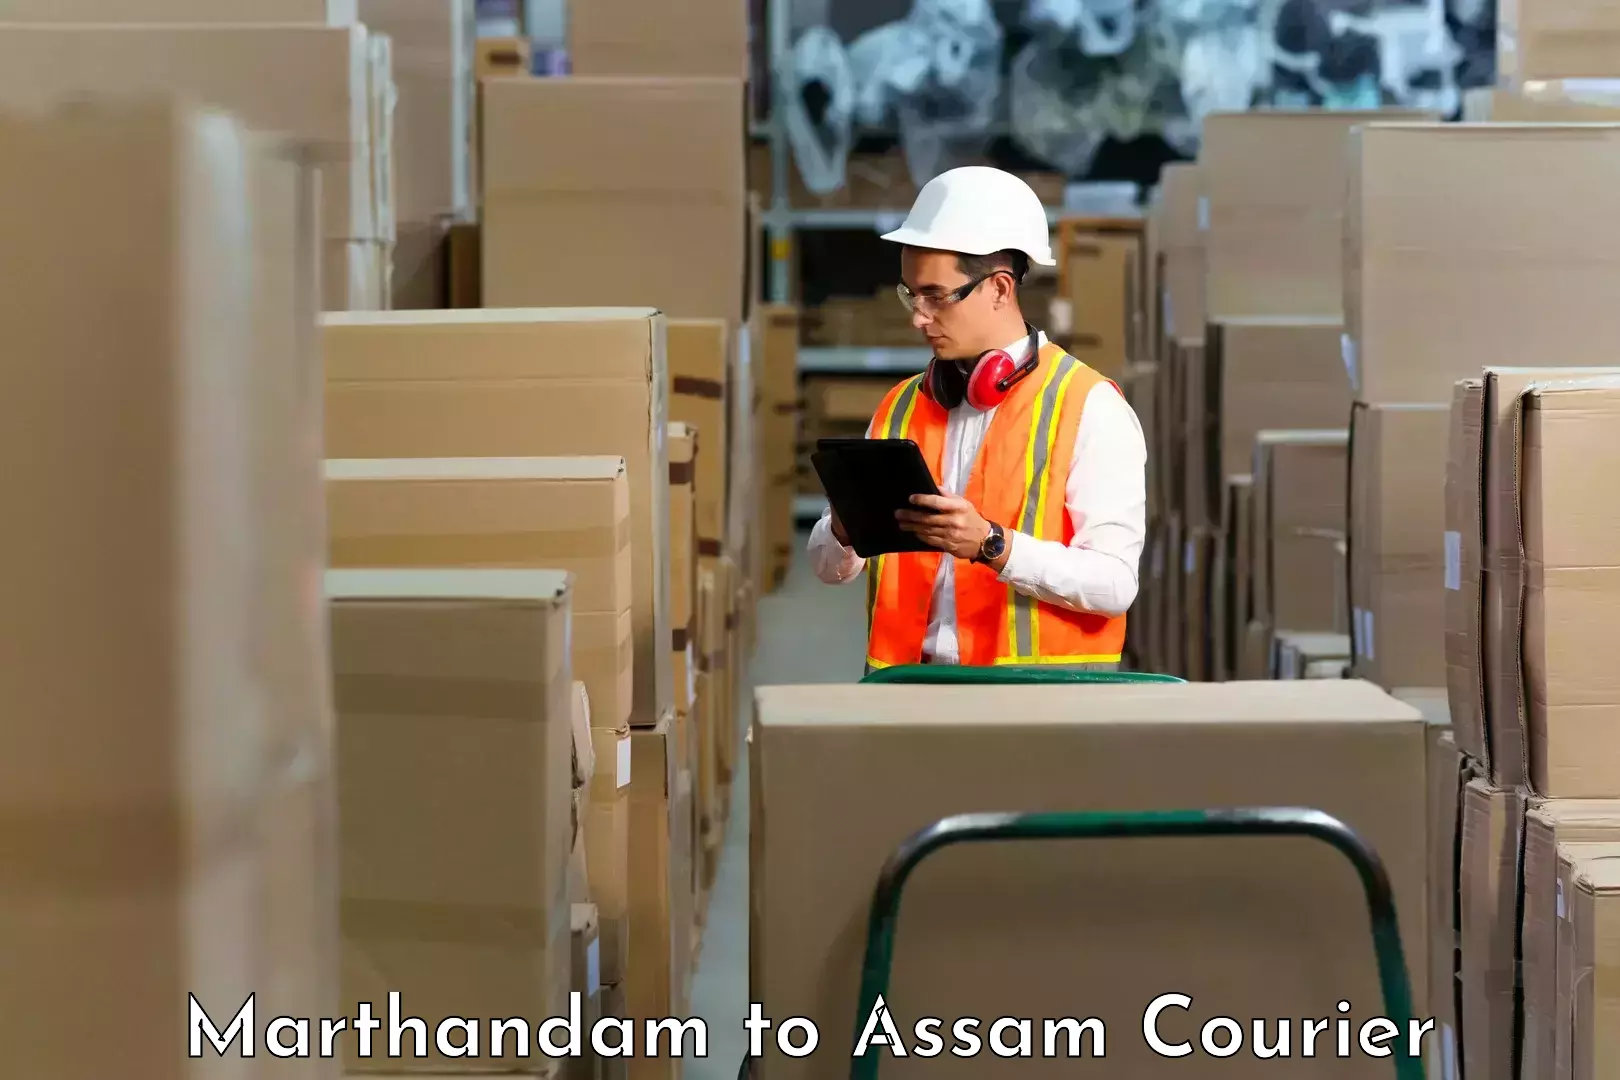 Courier service comparison in Marthandam to Assam